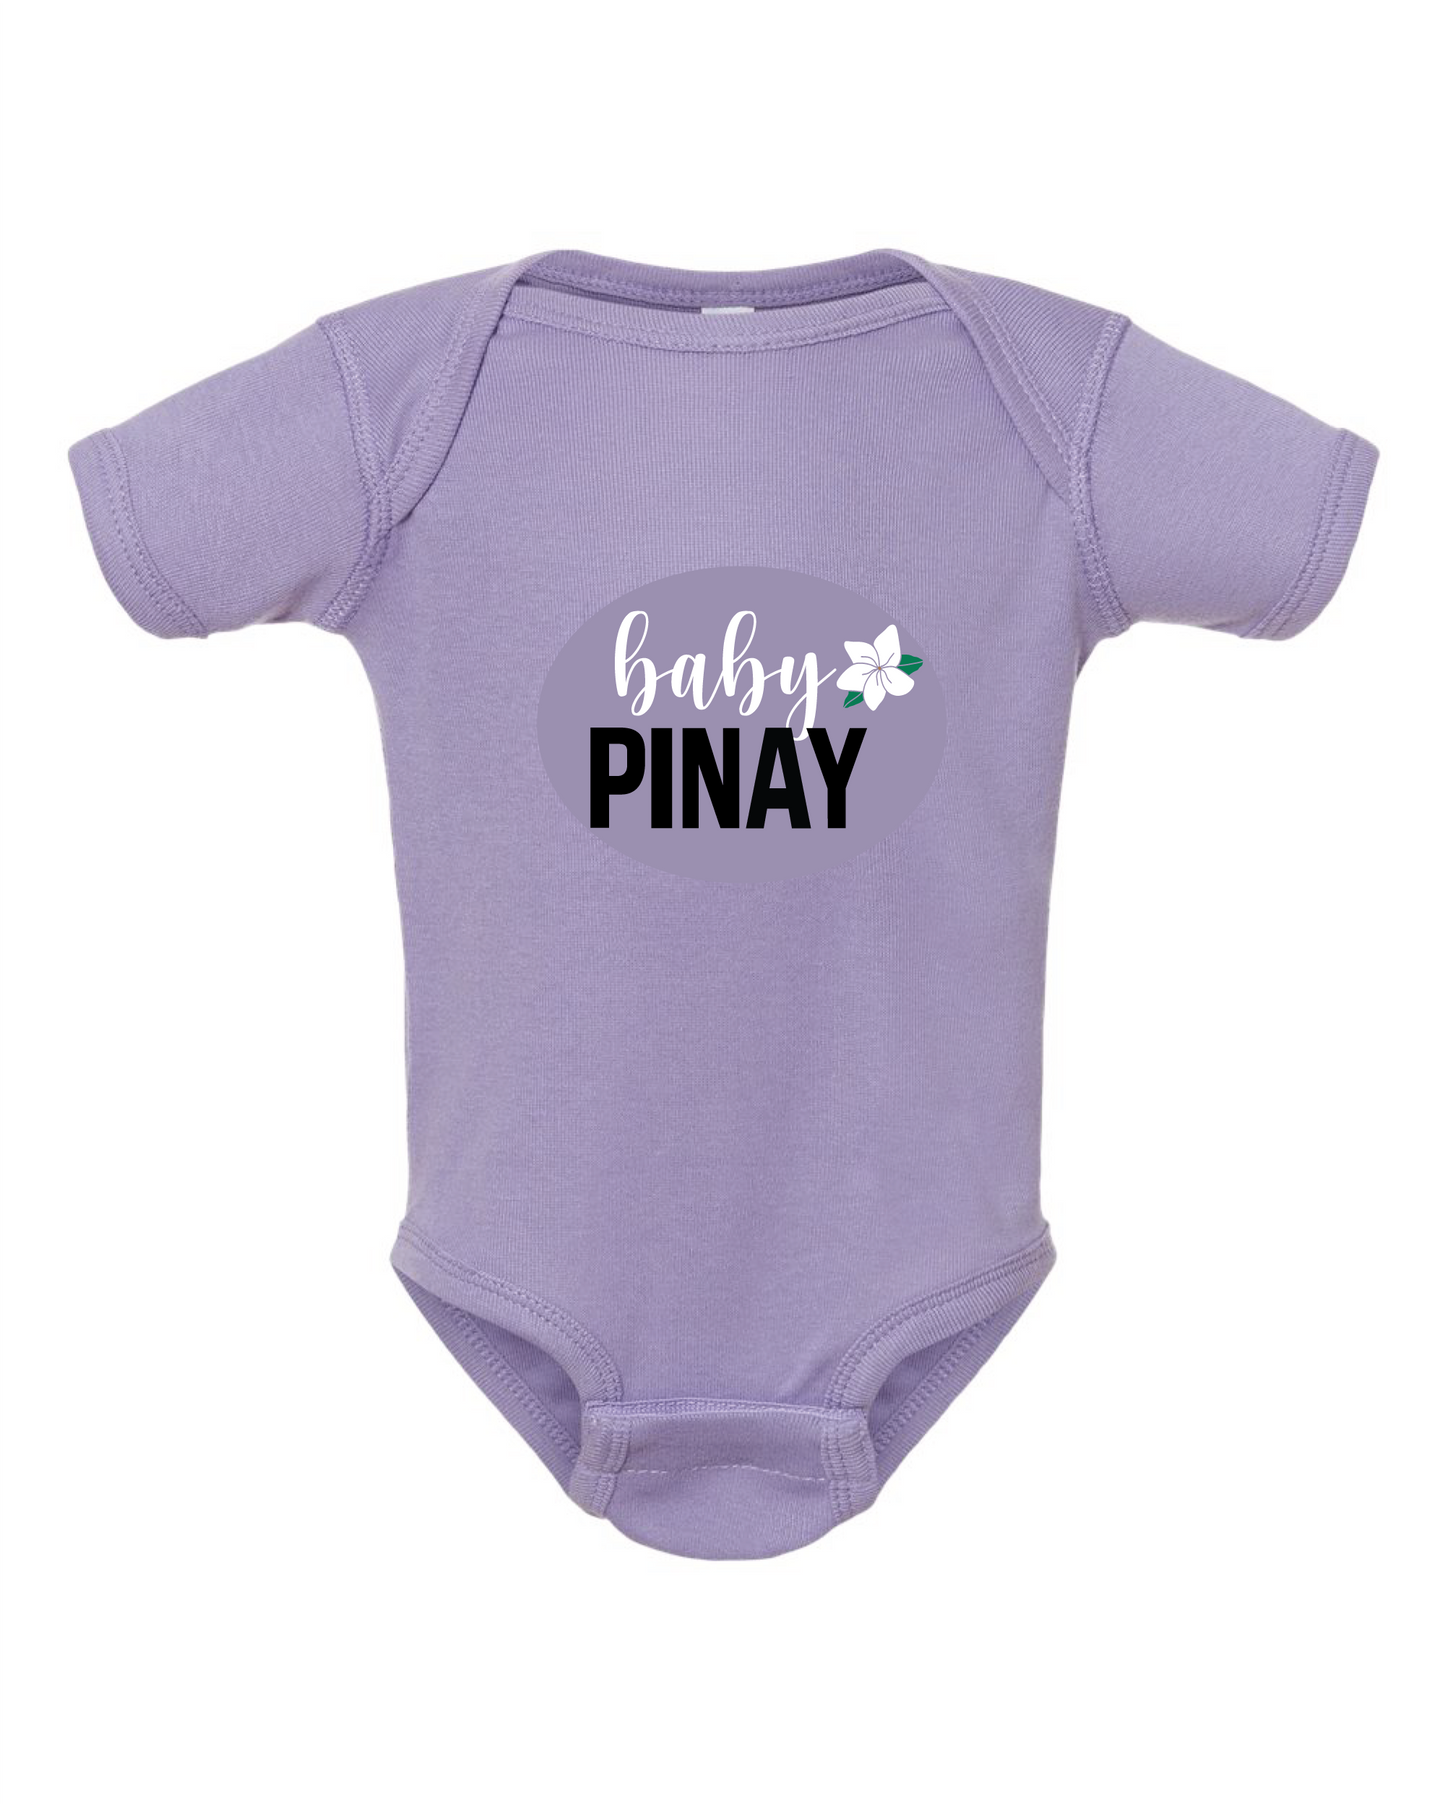 Baby Pinay Onesie Purple